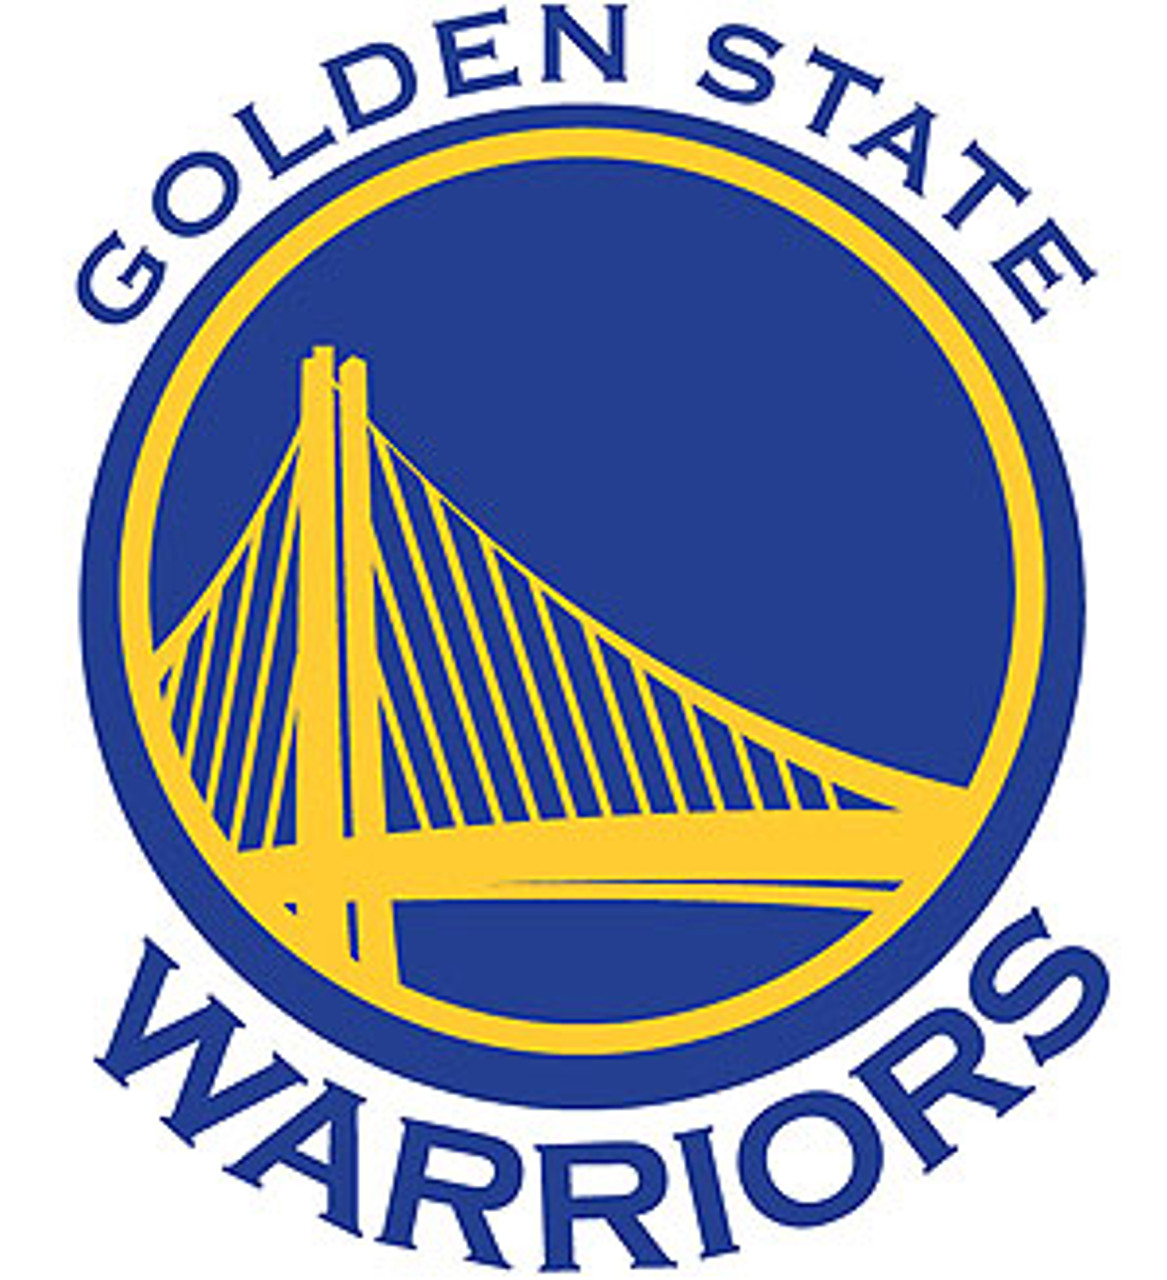 Golden State Warriors Door Decal Decor Sticker NBA Laminated